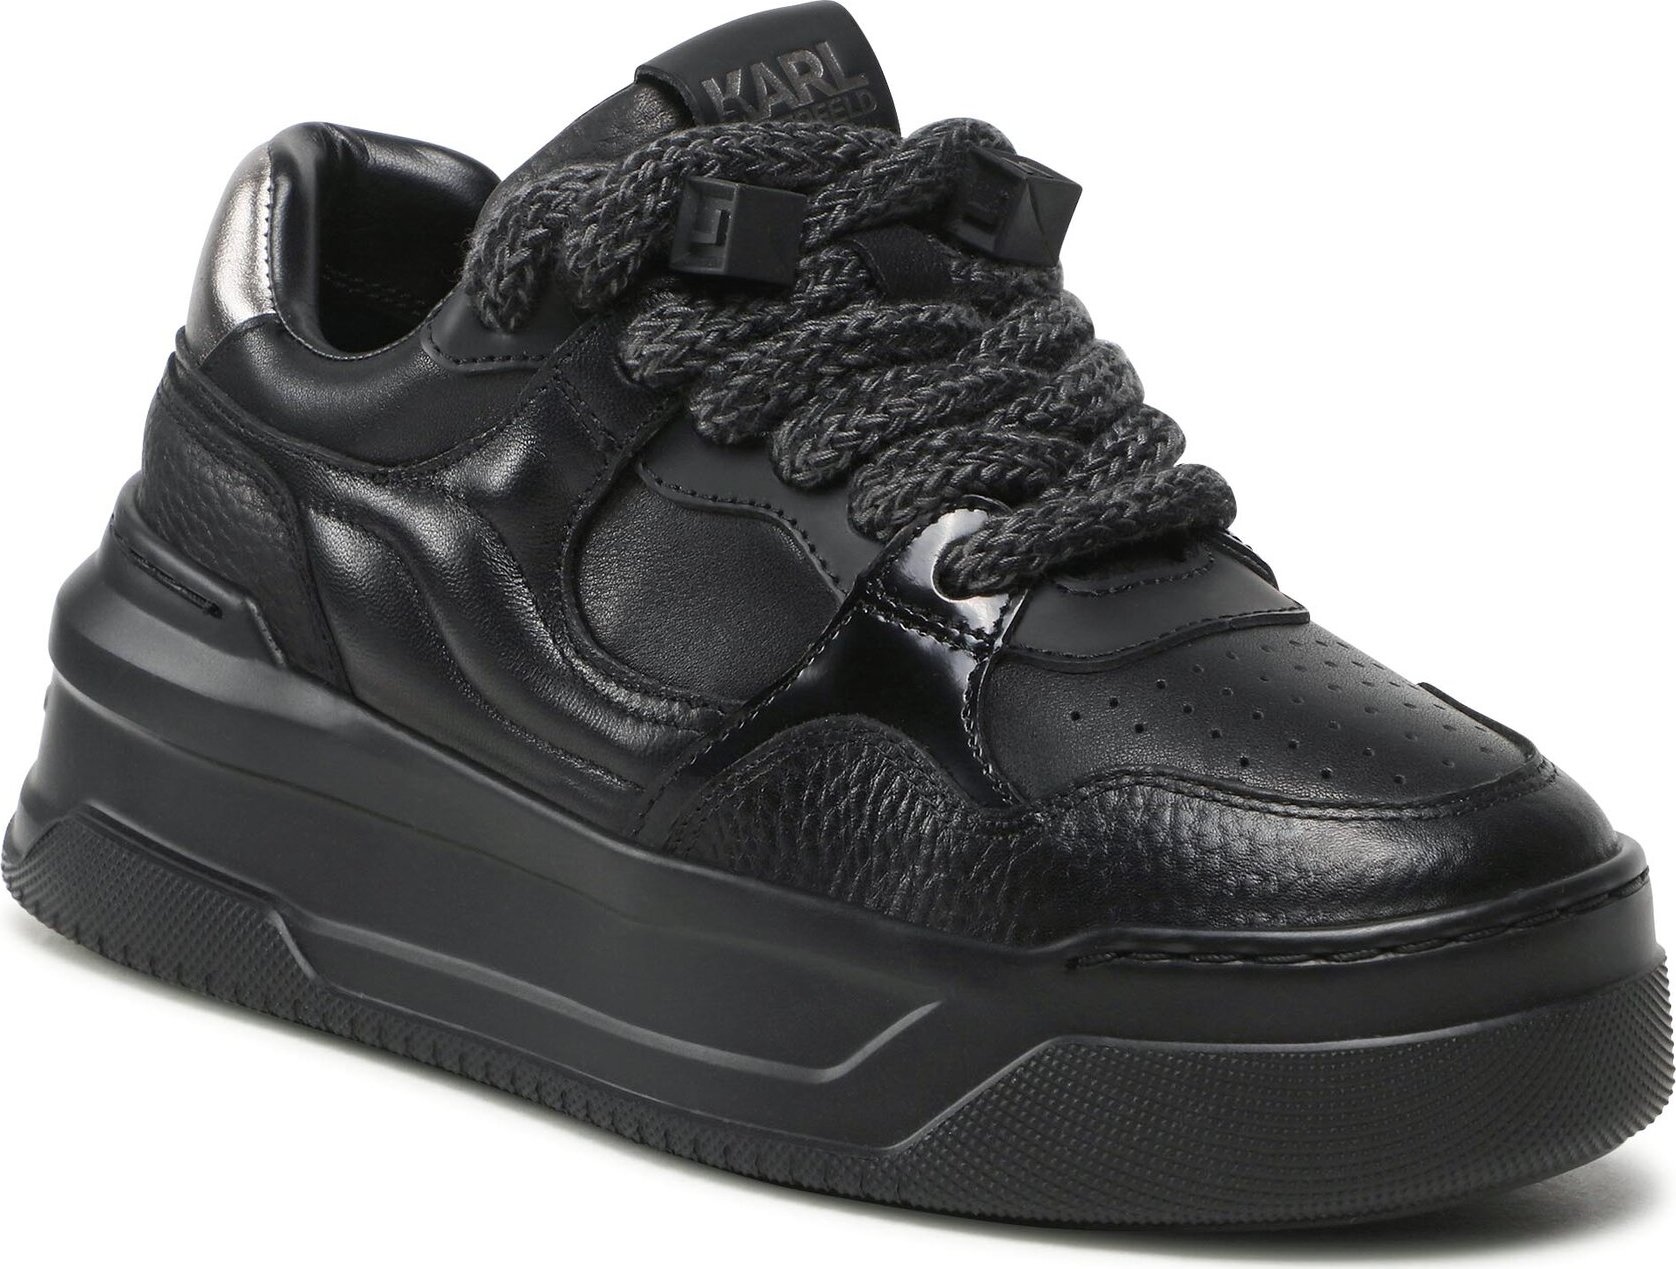 Sneakersy KARL LAGERFELD KL63320 Black Lthr / Mono